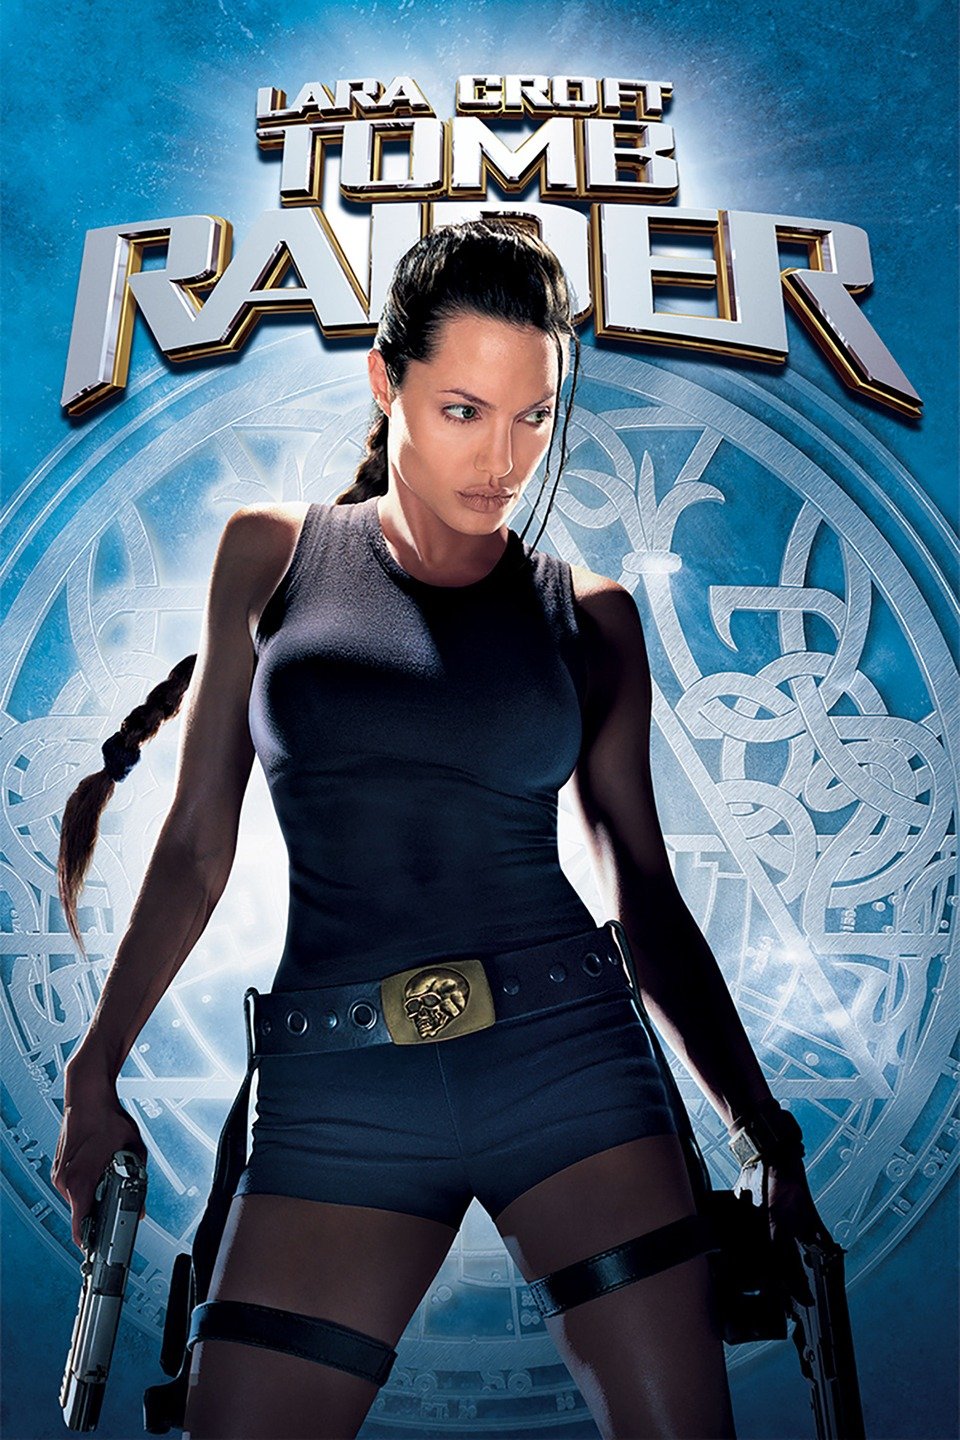 [MINI Super-HQ] Lara Croft: Tomb Raider (2001) ลาร่า ครอฟท์ ทูมเรเดอร์ ภาค 1 [1080p] [พากย์ไทย 5.1 + เสียงอังกฤษ DTS] [บรรยายไทย + อังกฤษ] [เสียงไทย + ซับไทย] [OPENLOAD]